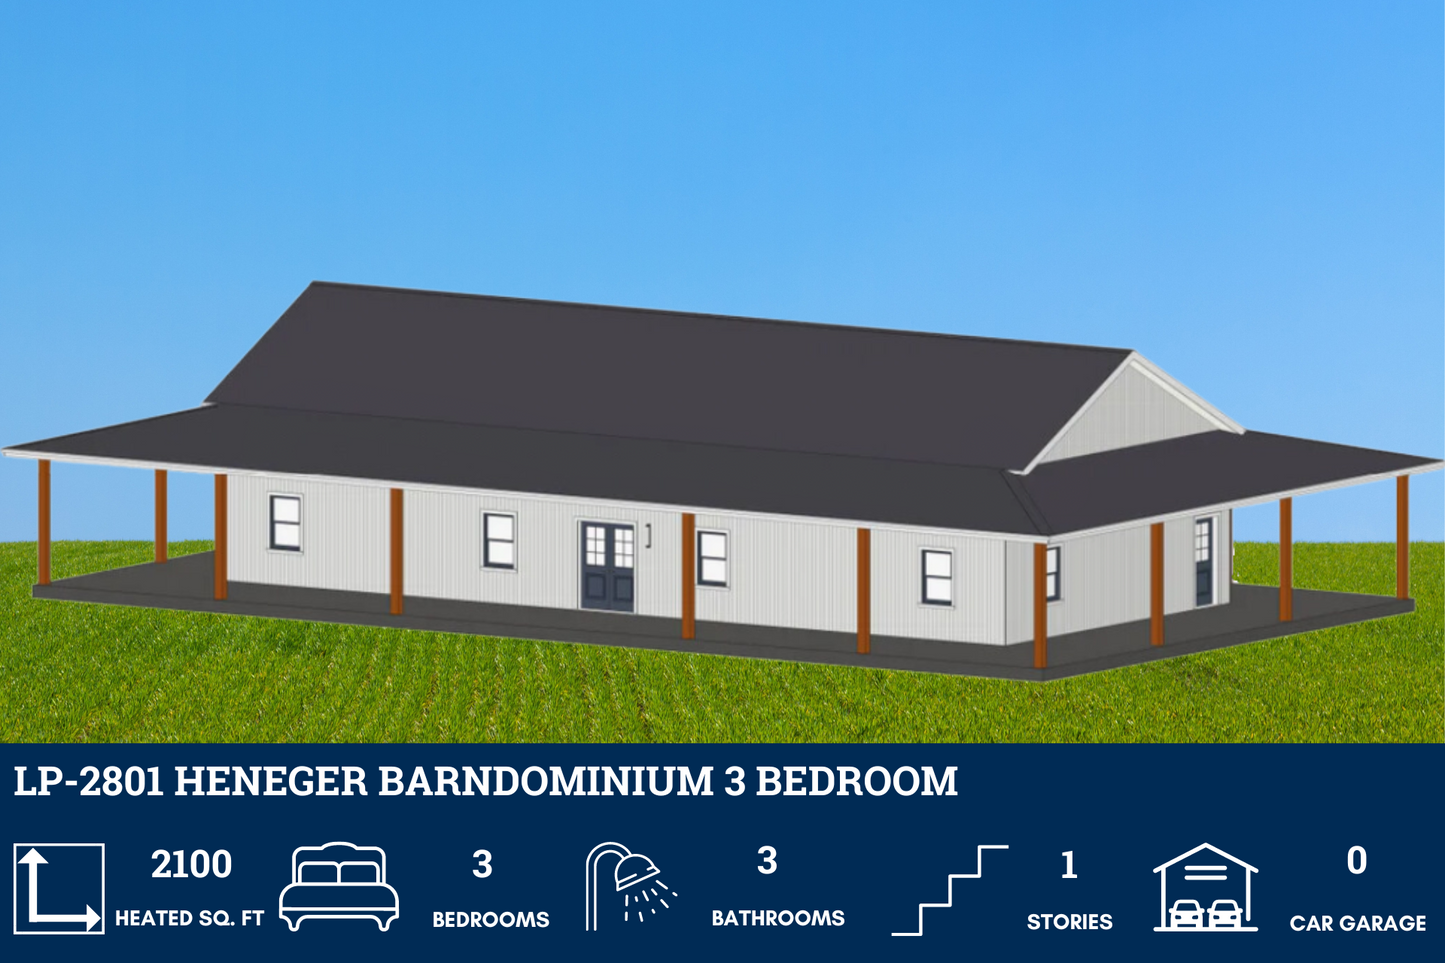 LP-2801 Heneger Barndominium House Plans